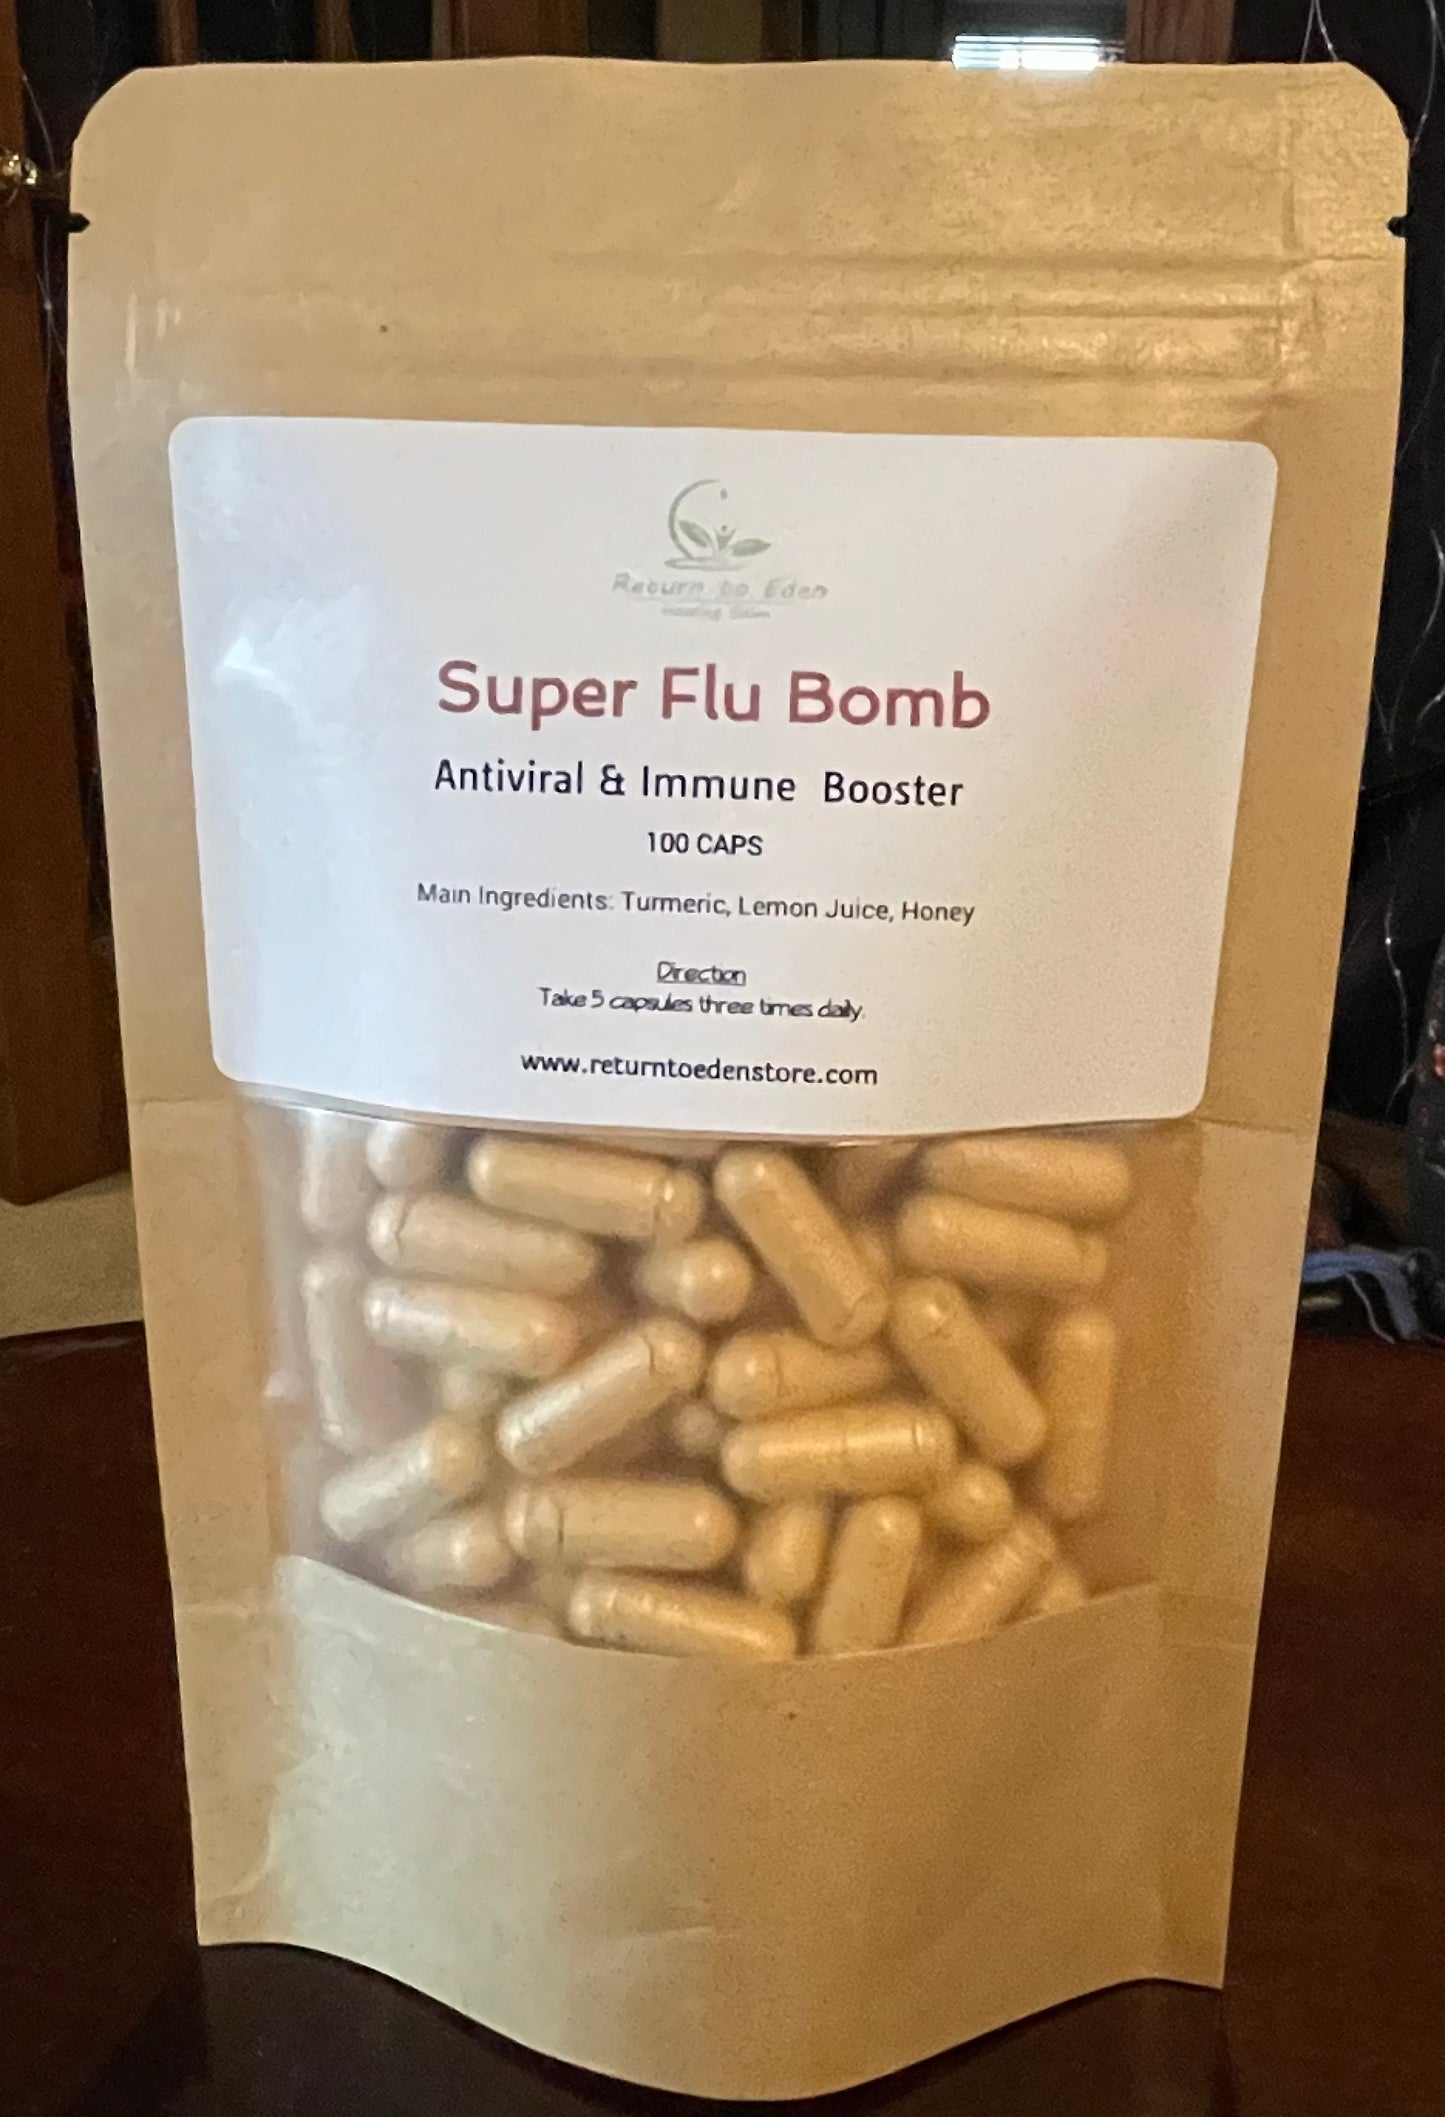 Super Flu Bomb